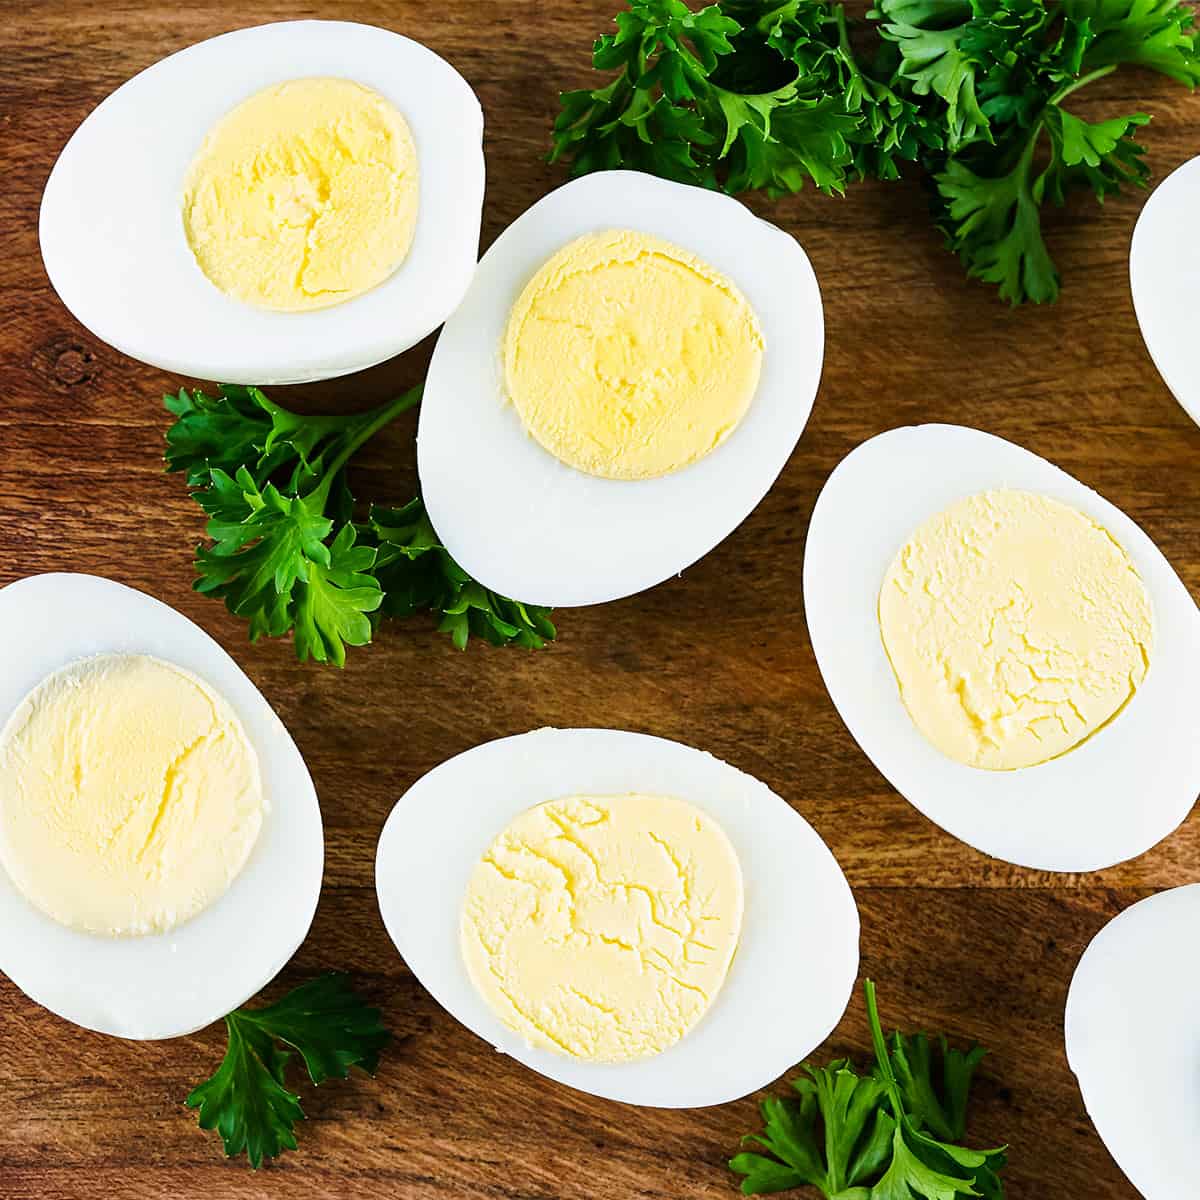 https://sundaysuppermovement.com/wp-content/uploads/2020/03/instant-pot-hard-boiled-eggs-featured.jpg